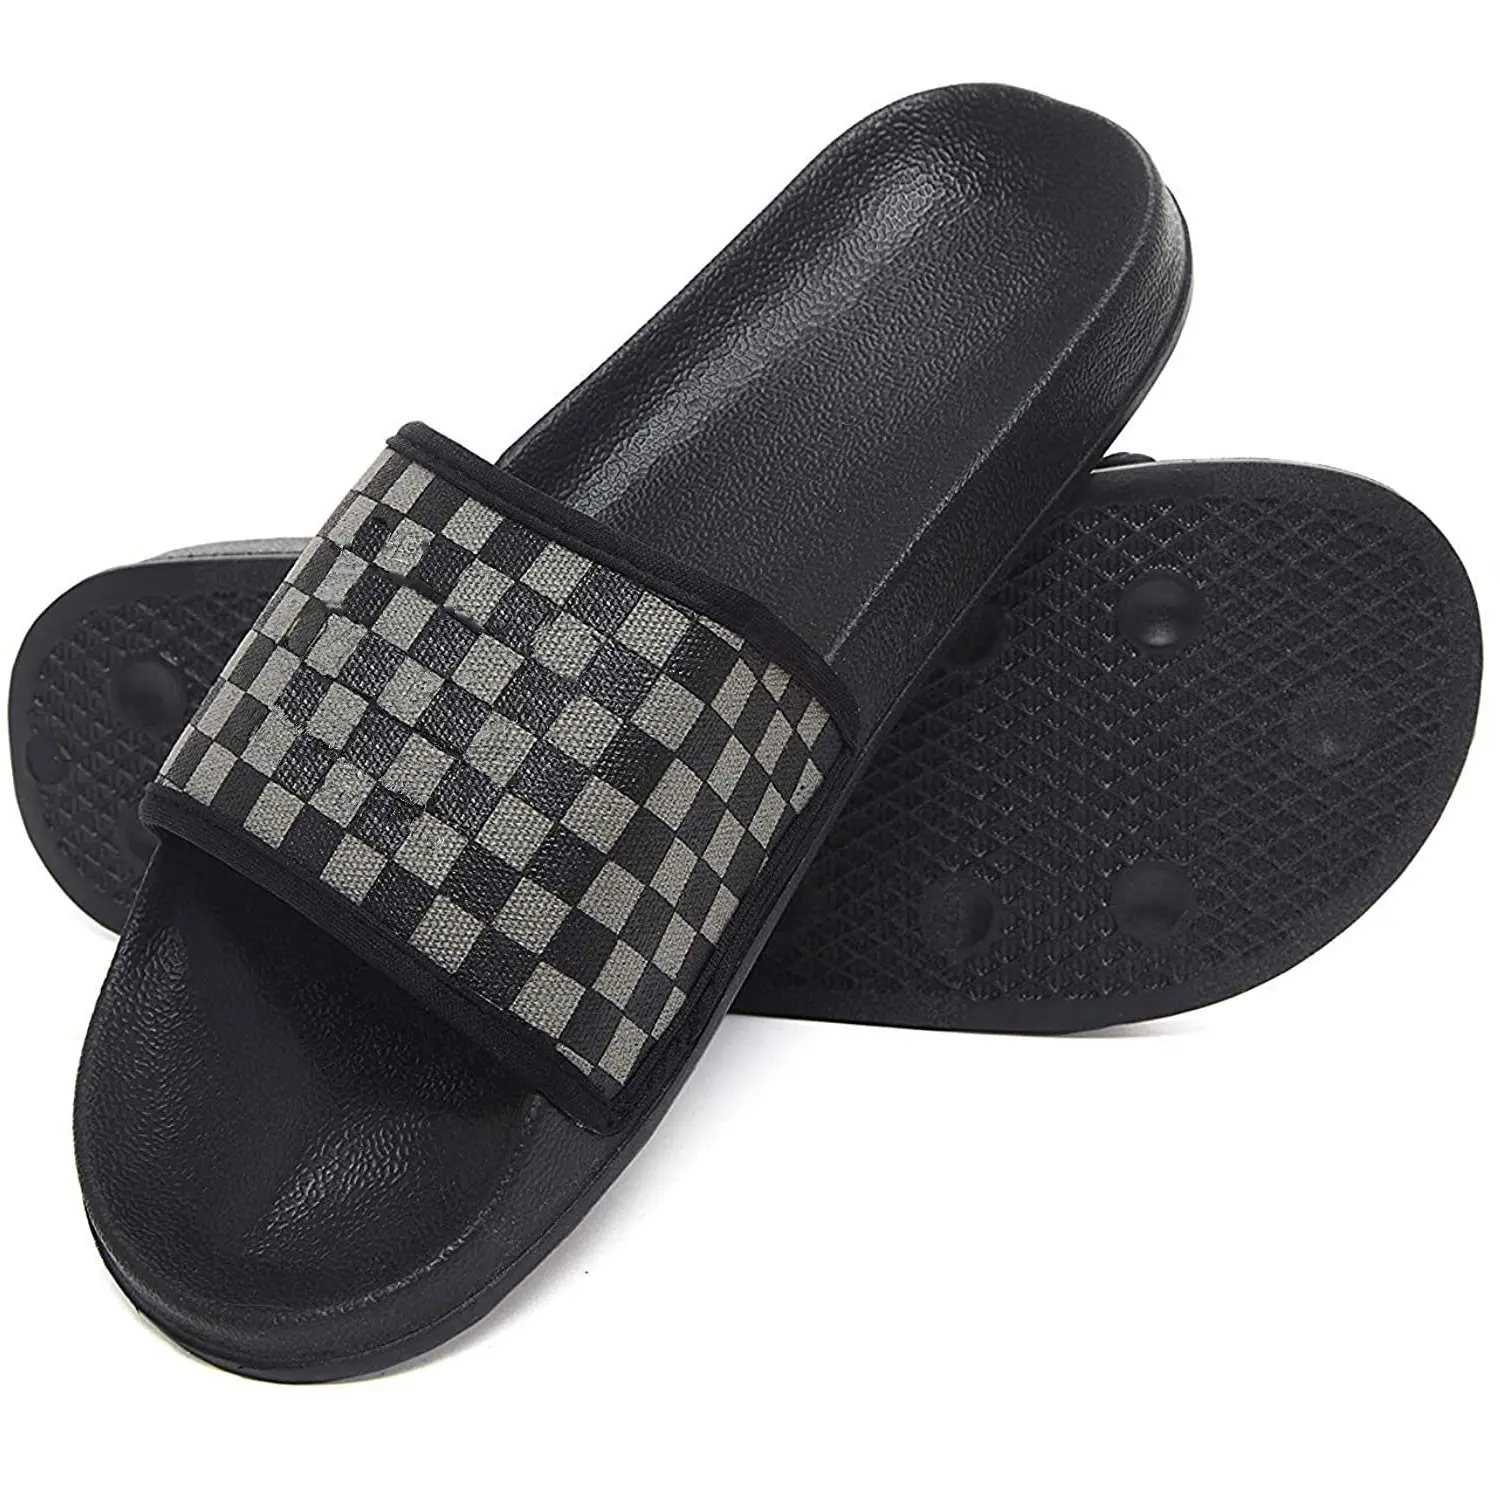 FREE SAMPLE 2021 girls new design shoes indoor outdoor eva slipper Men s Slip On Slide Sandals Black Gray Large